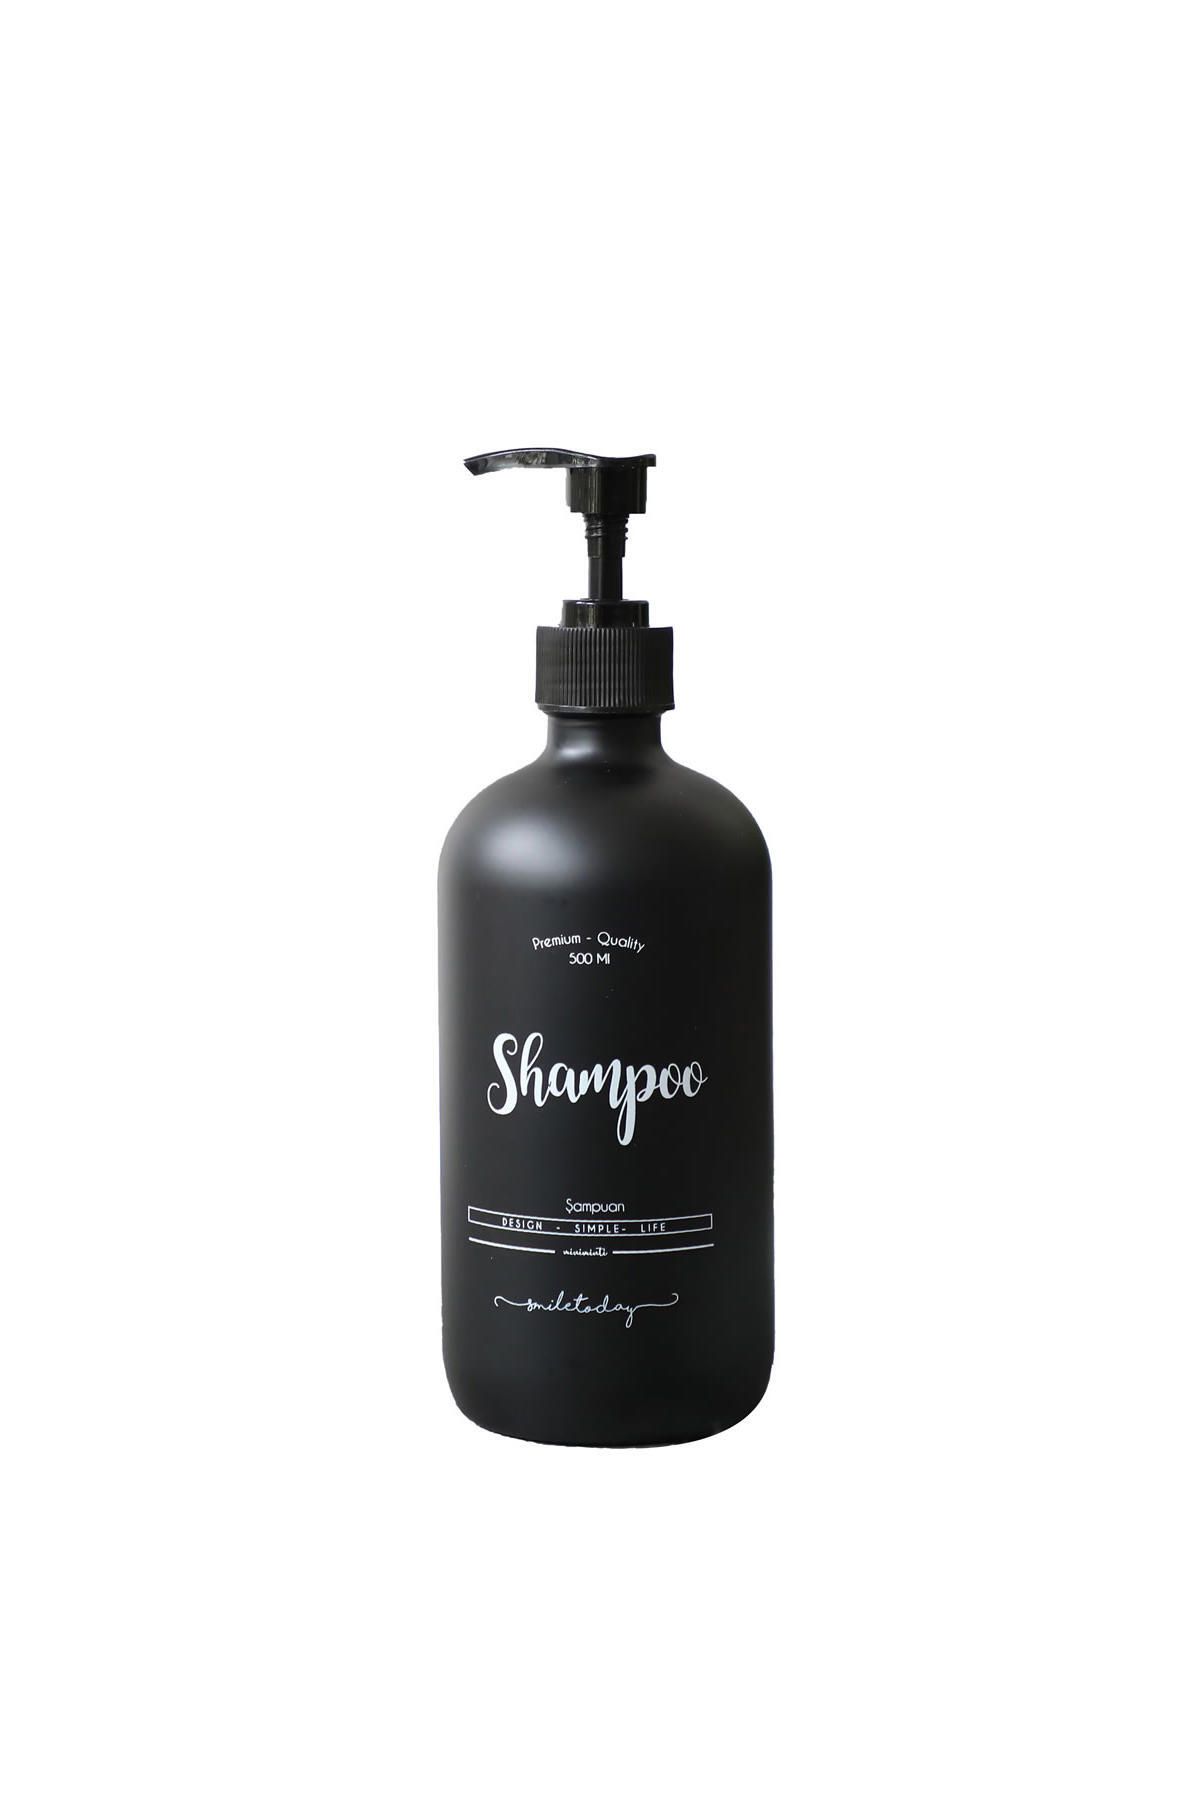 Miniminti Siyah Cam Şampuan Şişesi - 500 Ml (shampoo)